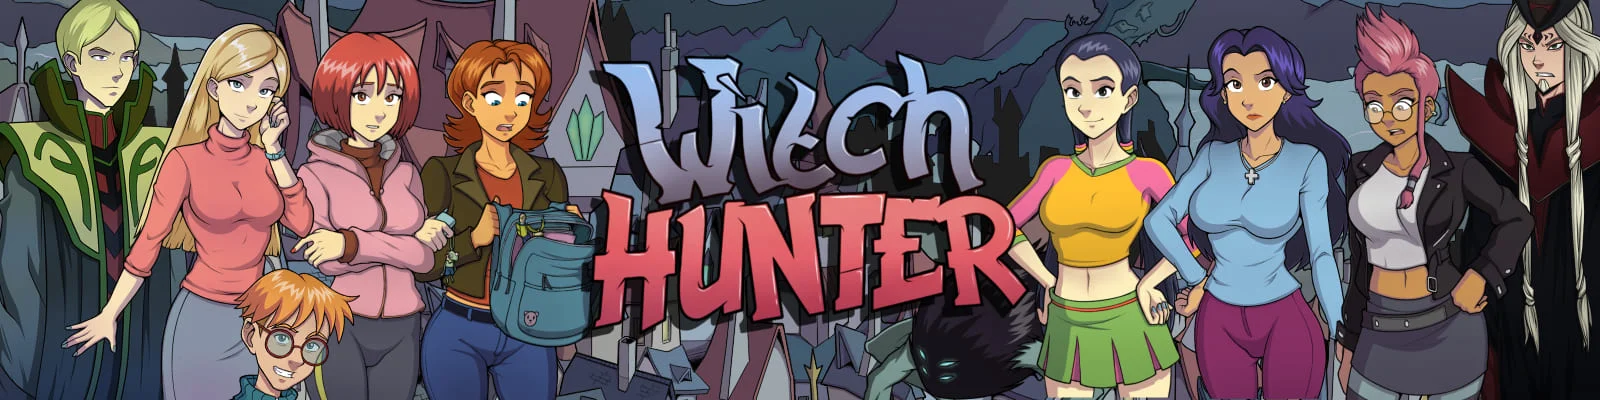 Witch Hunter v.0.18.0.0